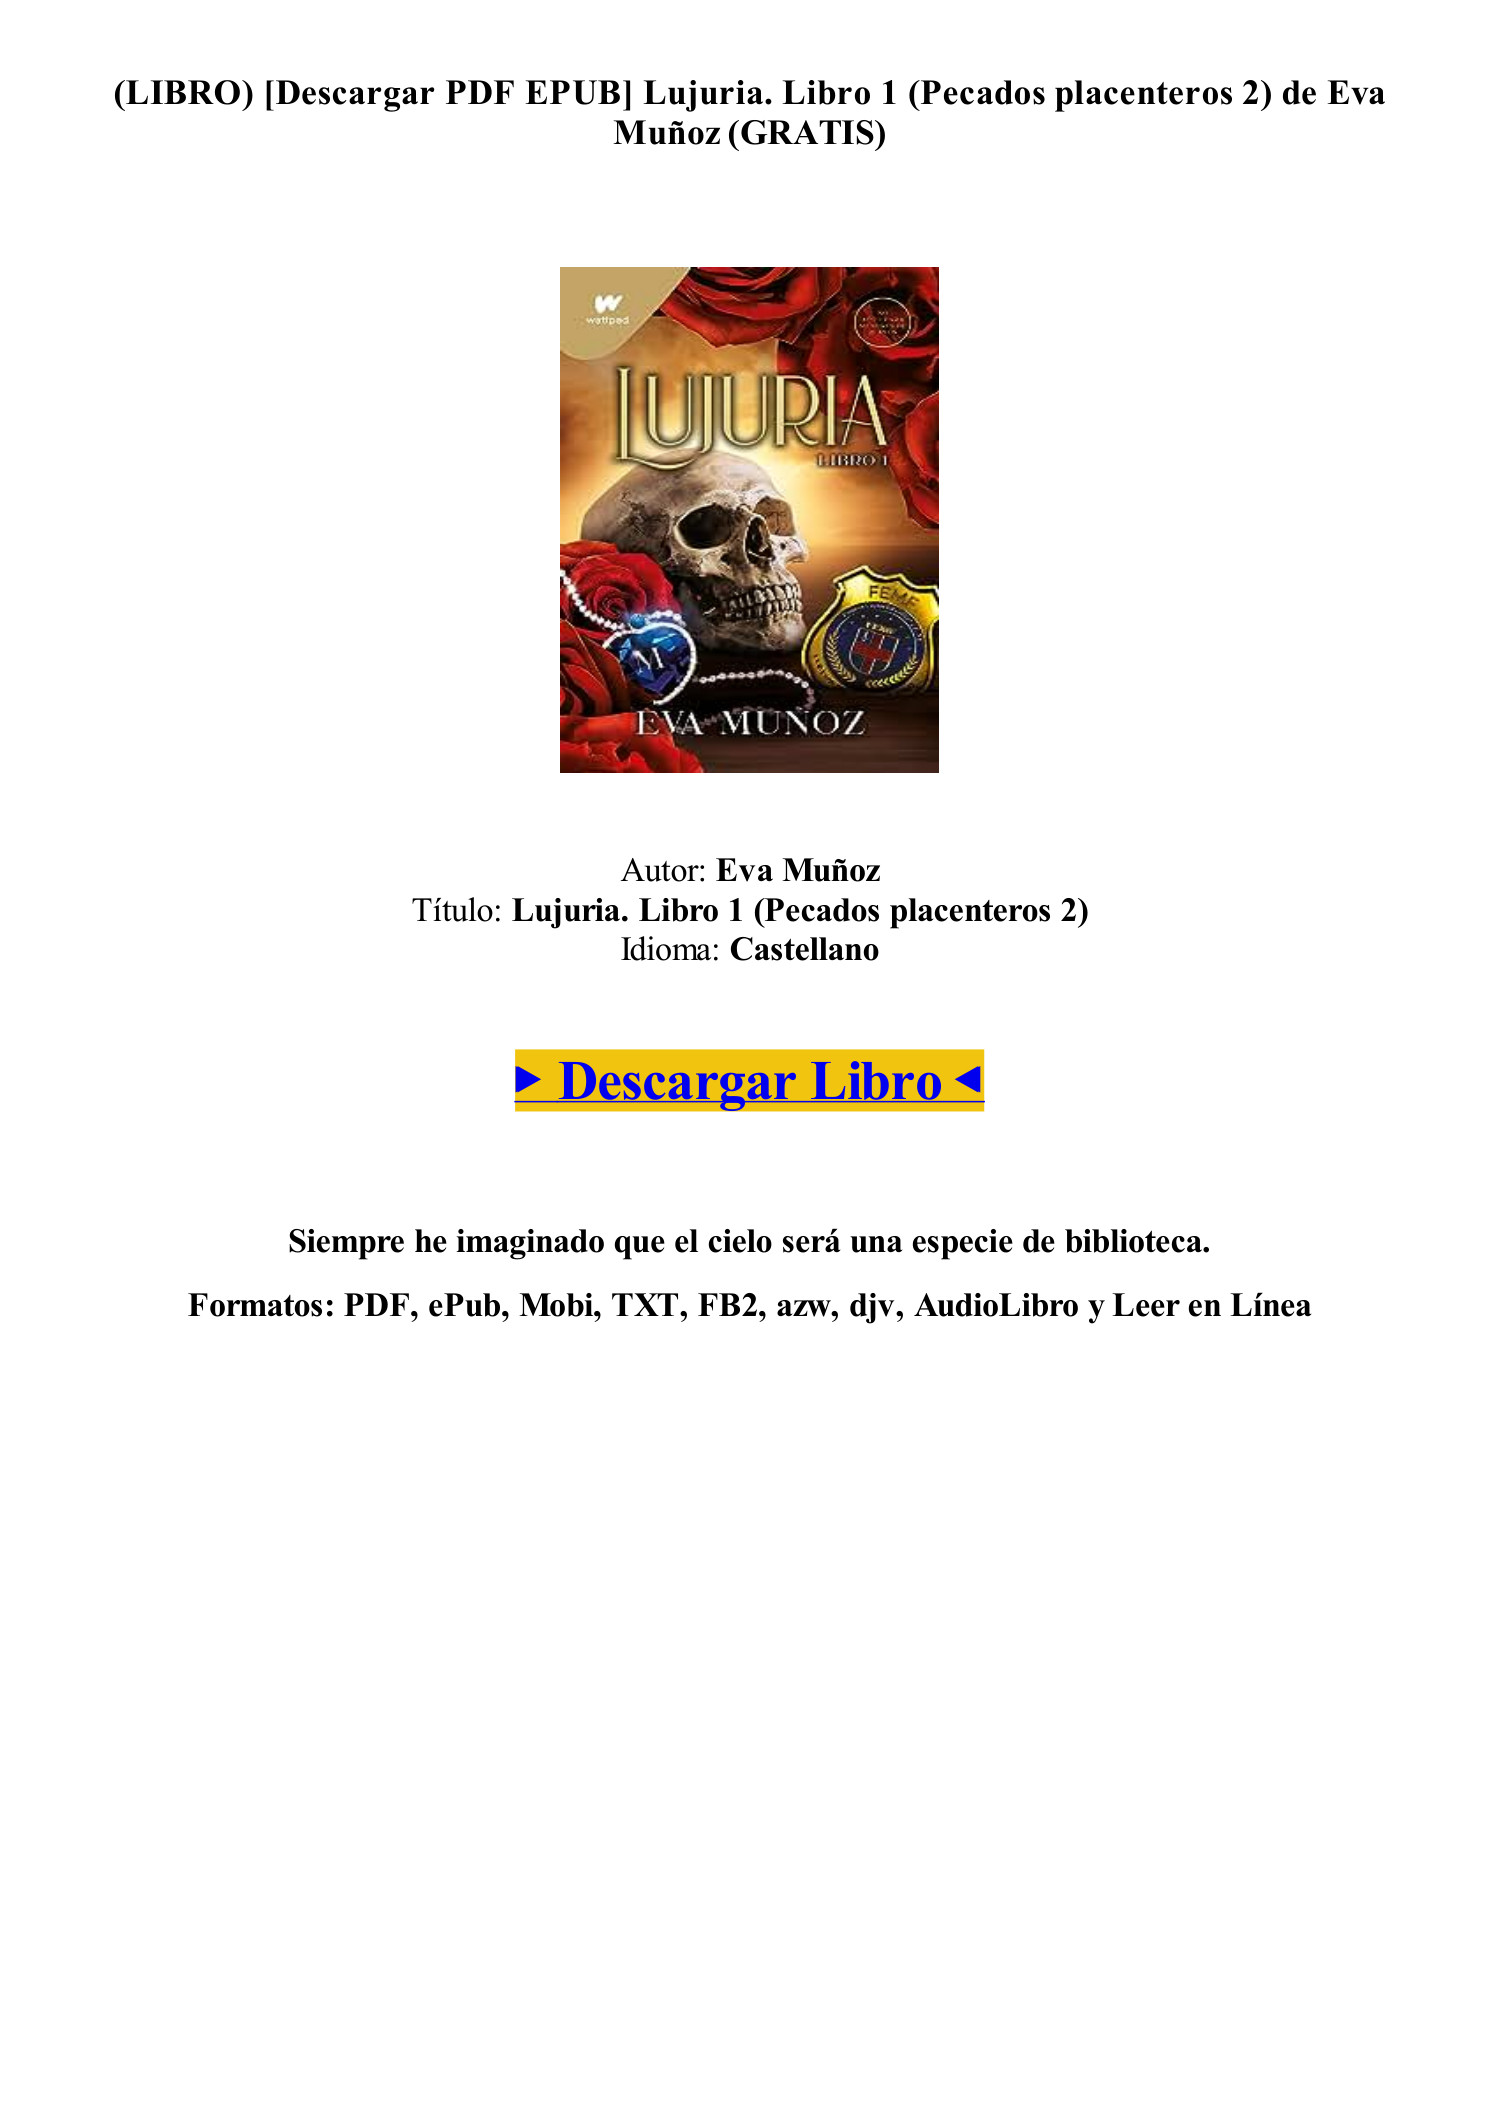 Gratis [Descargar PDF EPUB] Lujuria. Libro 1 (Pecados placenteros